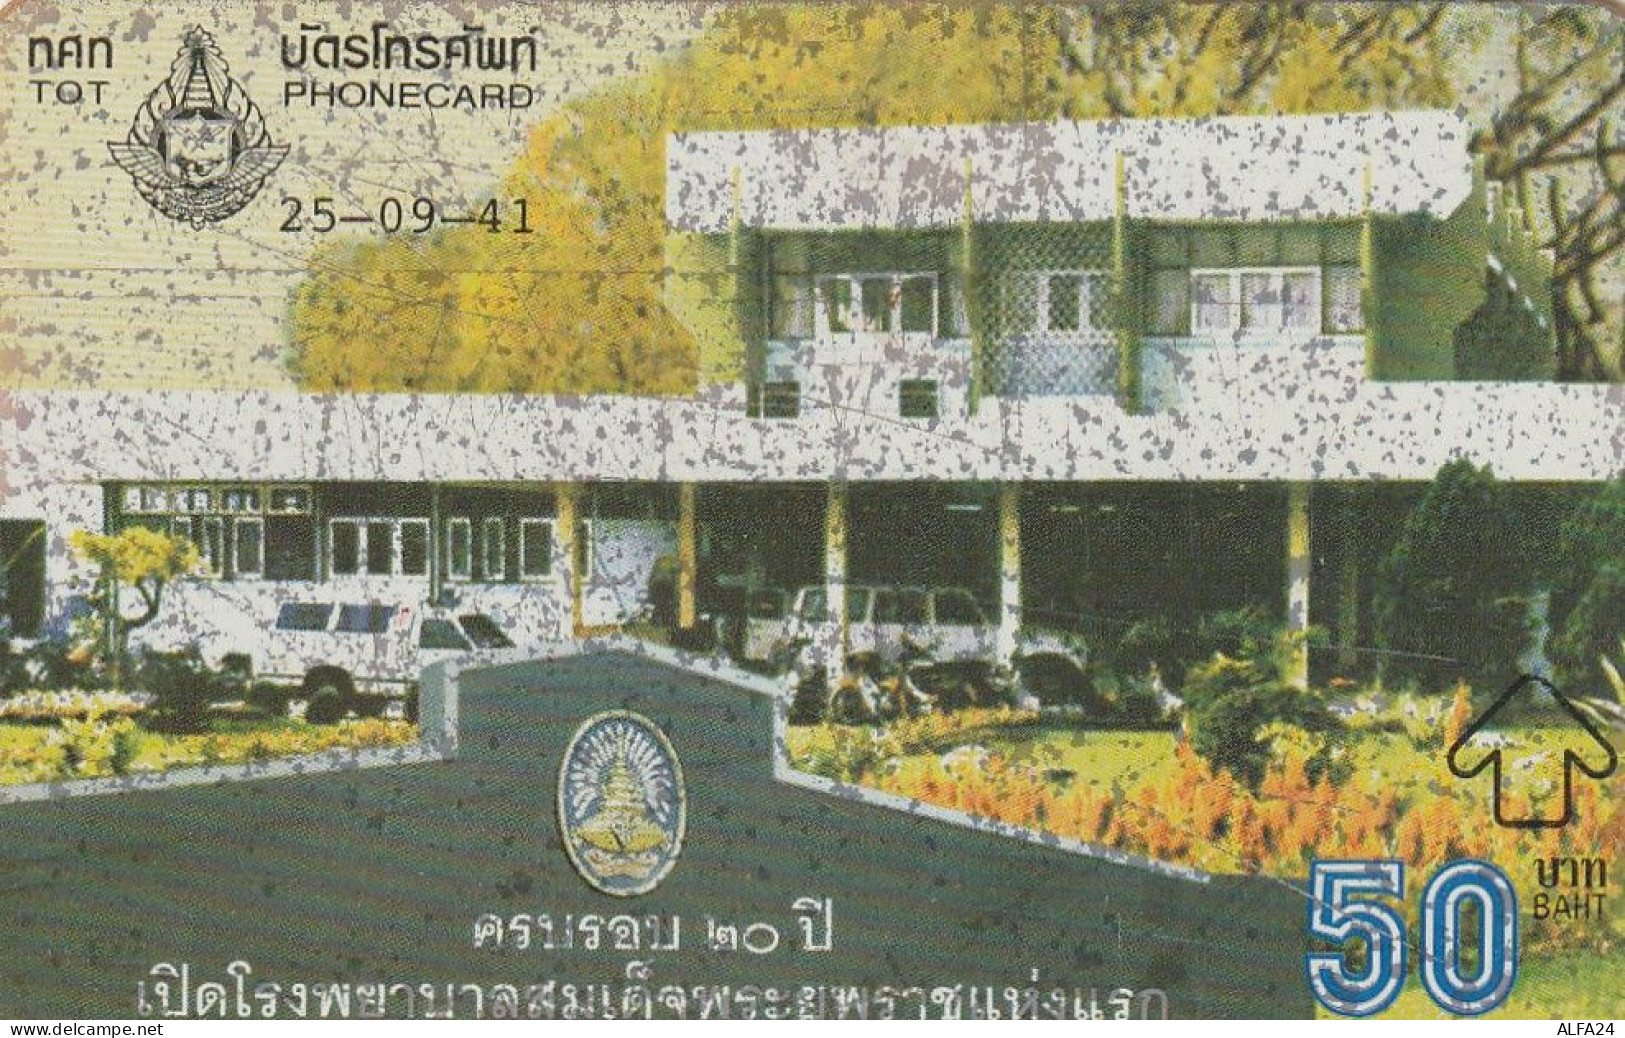 PHONE CARD THAILANDIA  (CZ1230 - Tailandia